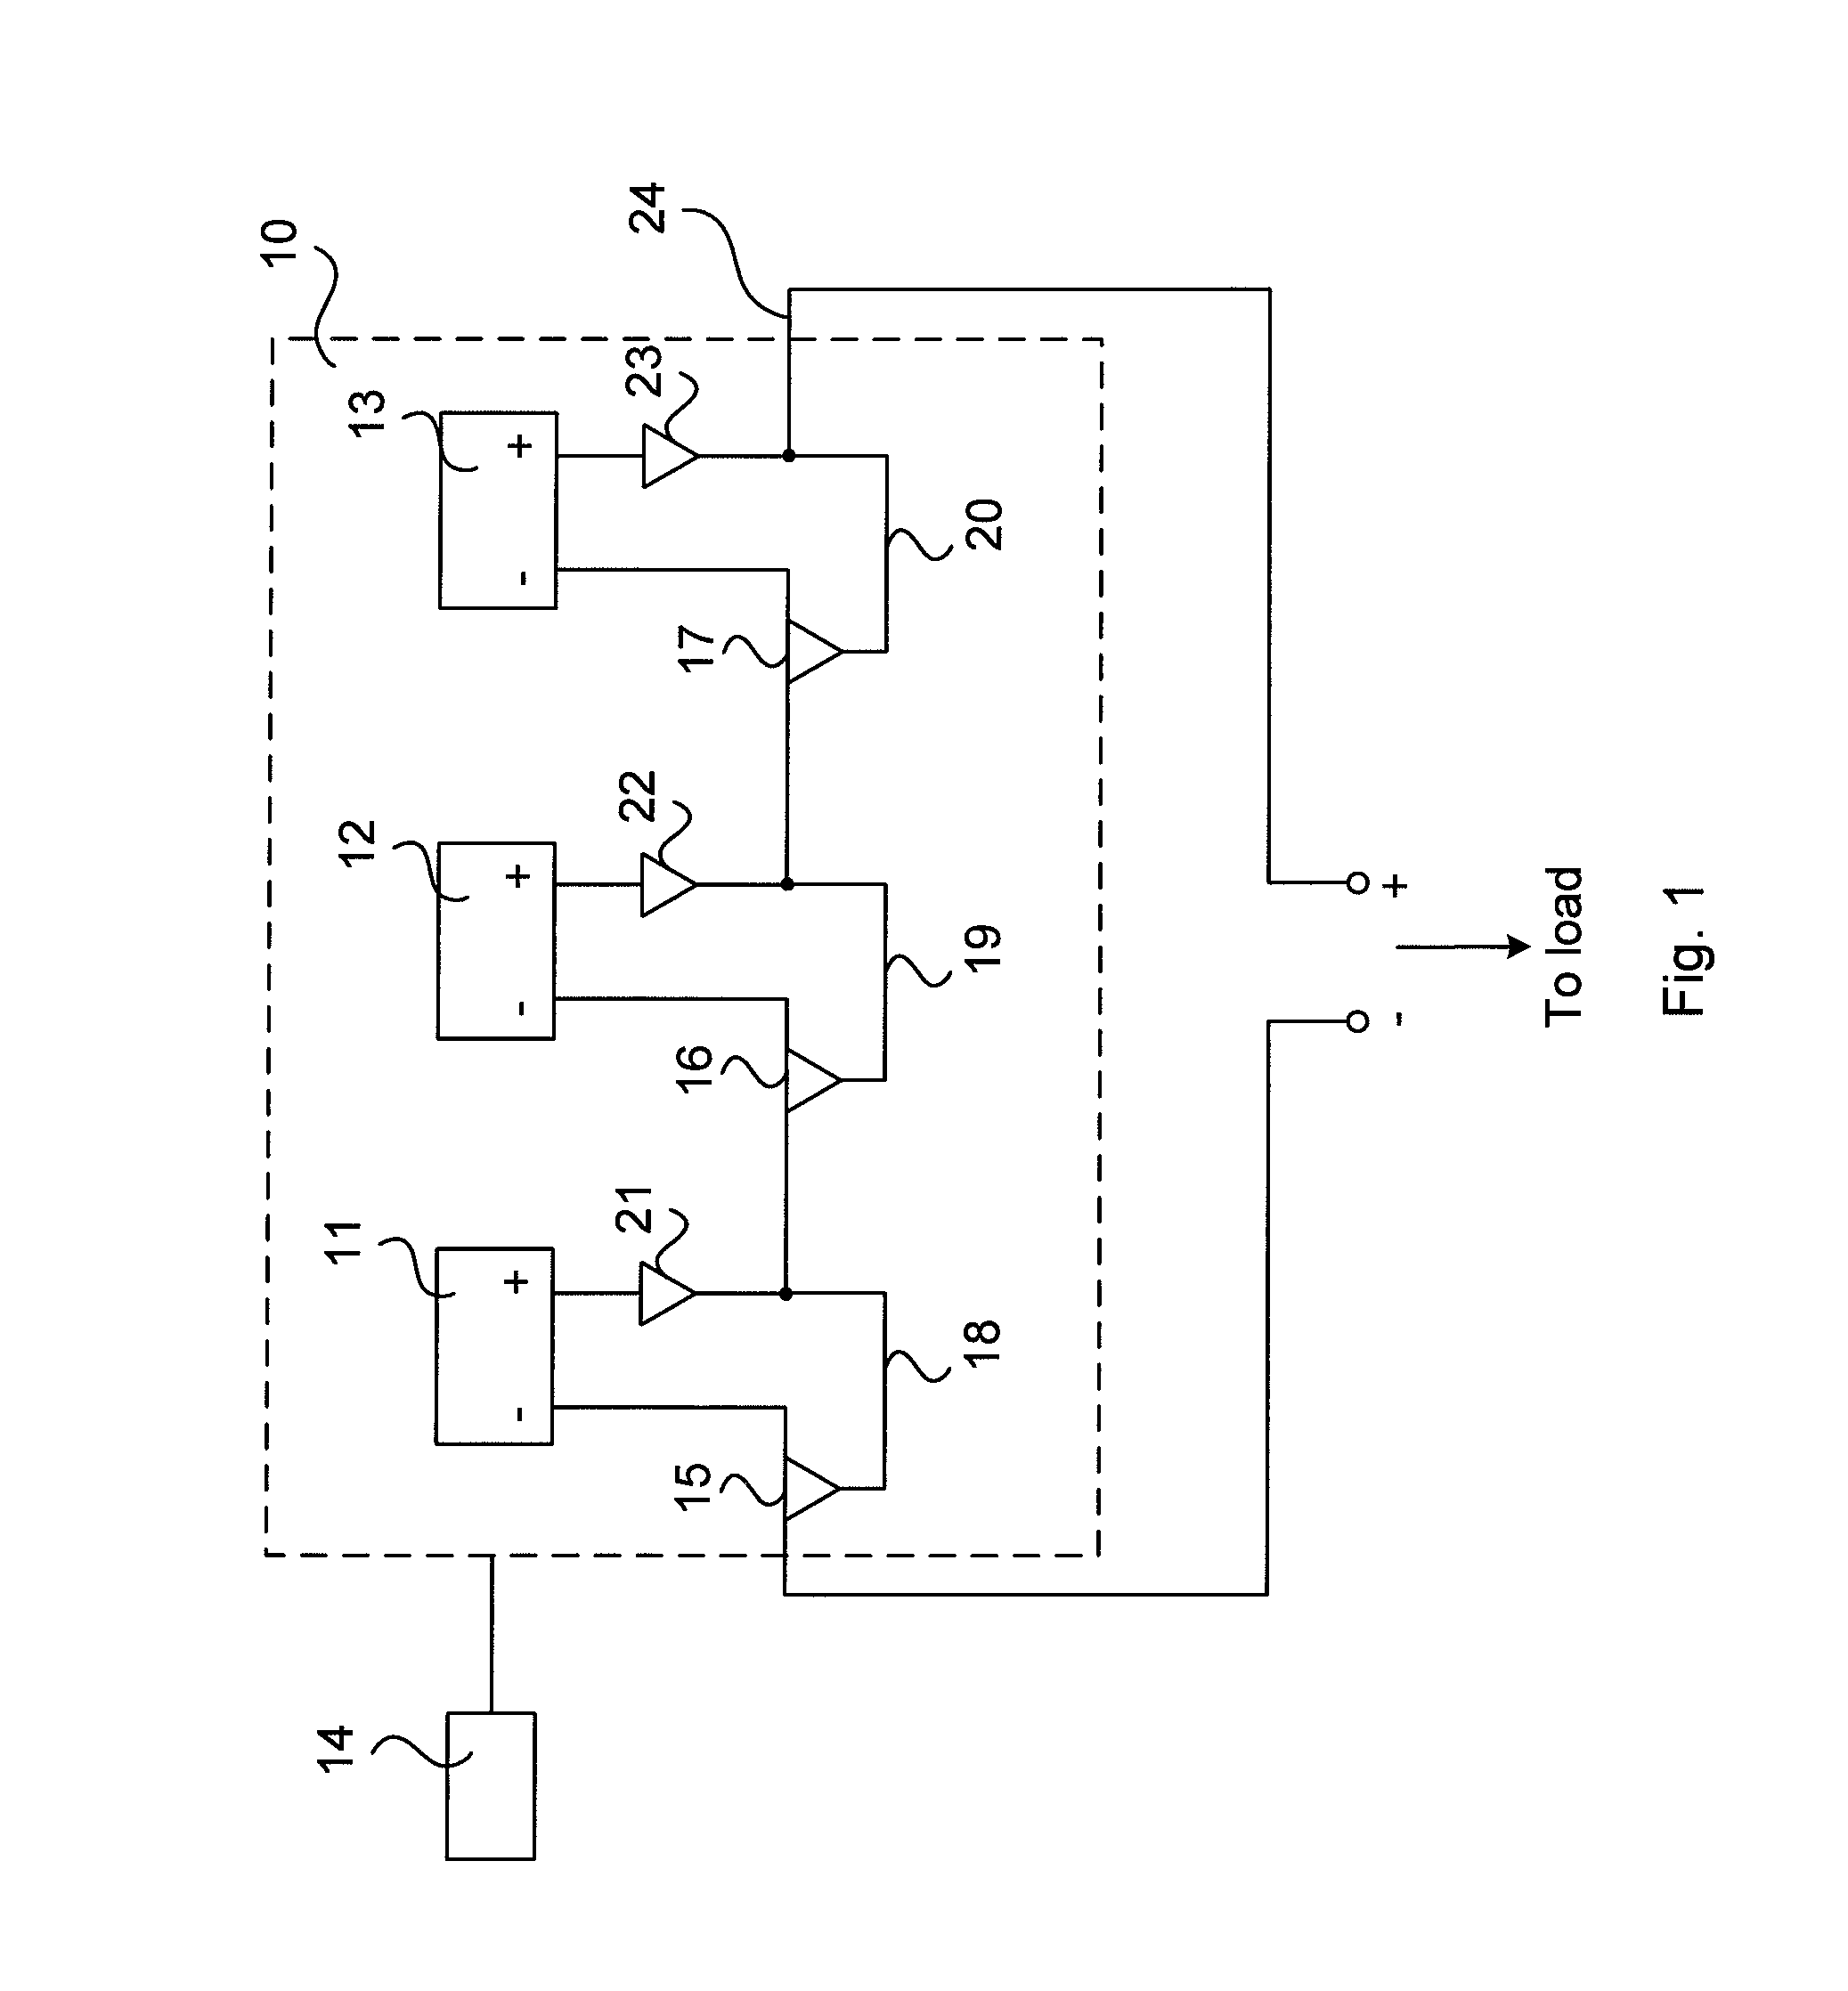 Battery module disconnect arrangement